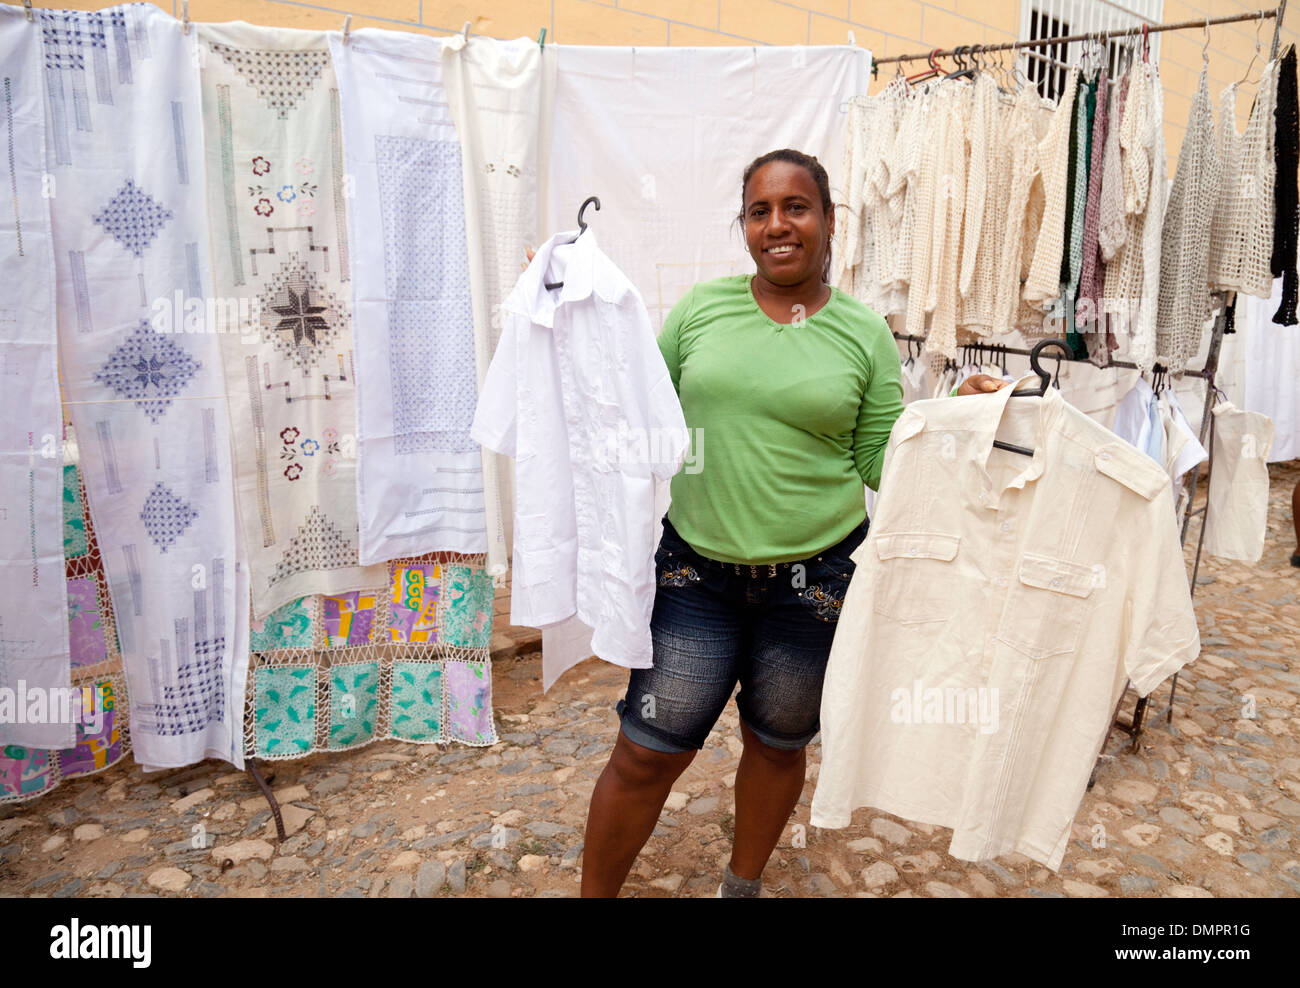 A stallholder in the street market selling clothes, Trinidad, Cuba, Caribbean, latin America Stock Photo